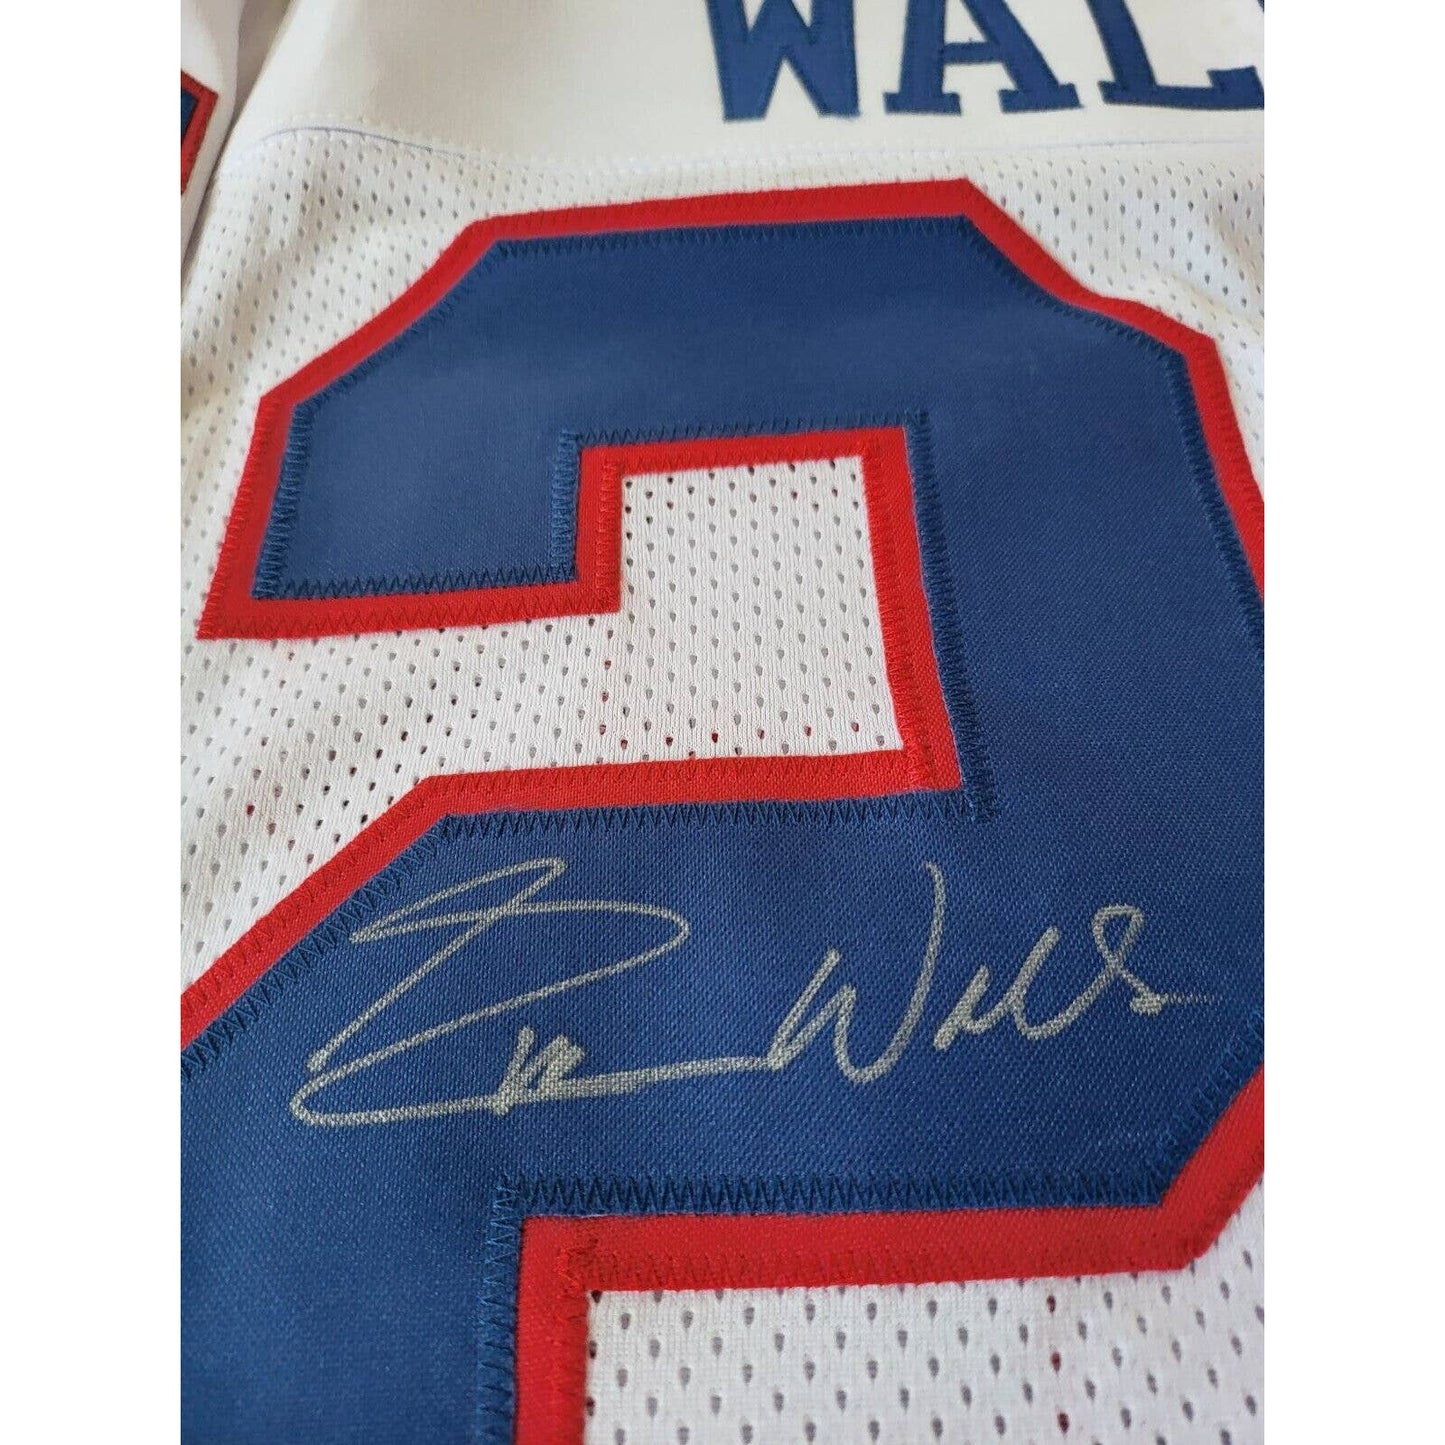 Everson Walls Autographed/Signed Jersey JSA COA New York Giants - TreasuresEvolved